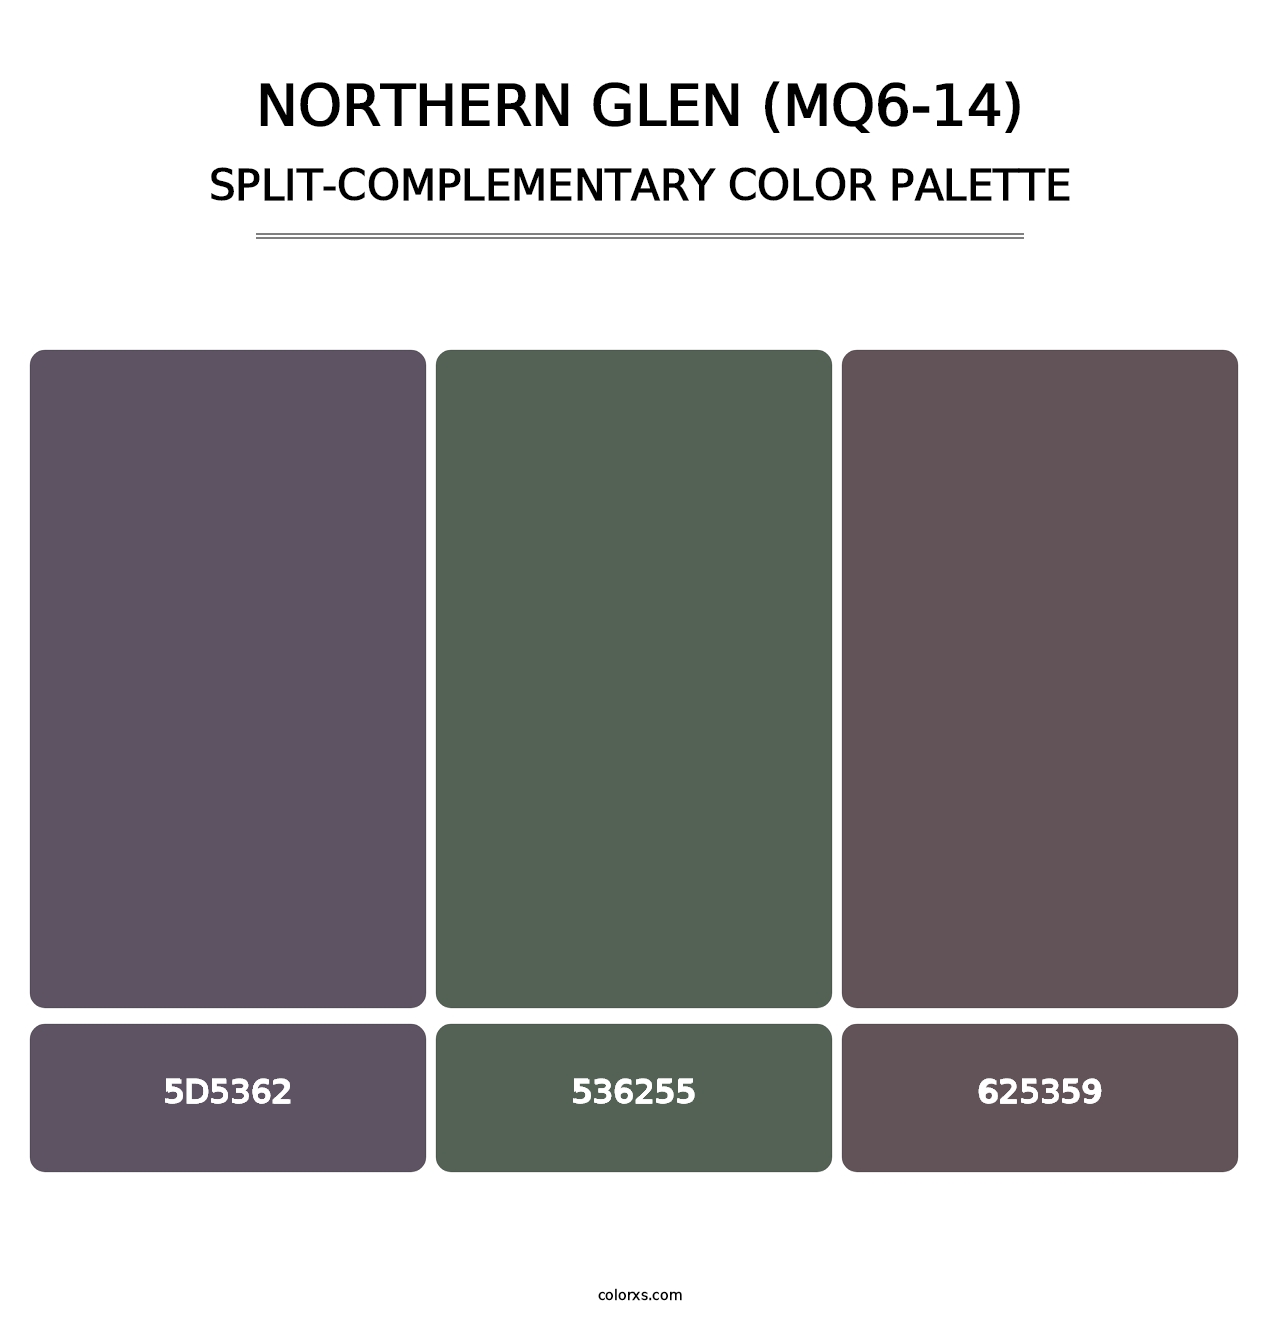 Northern Glen (MQ6-14) - Split-Complementary Color Palette